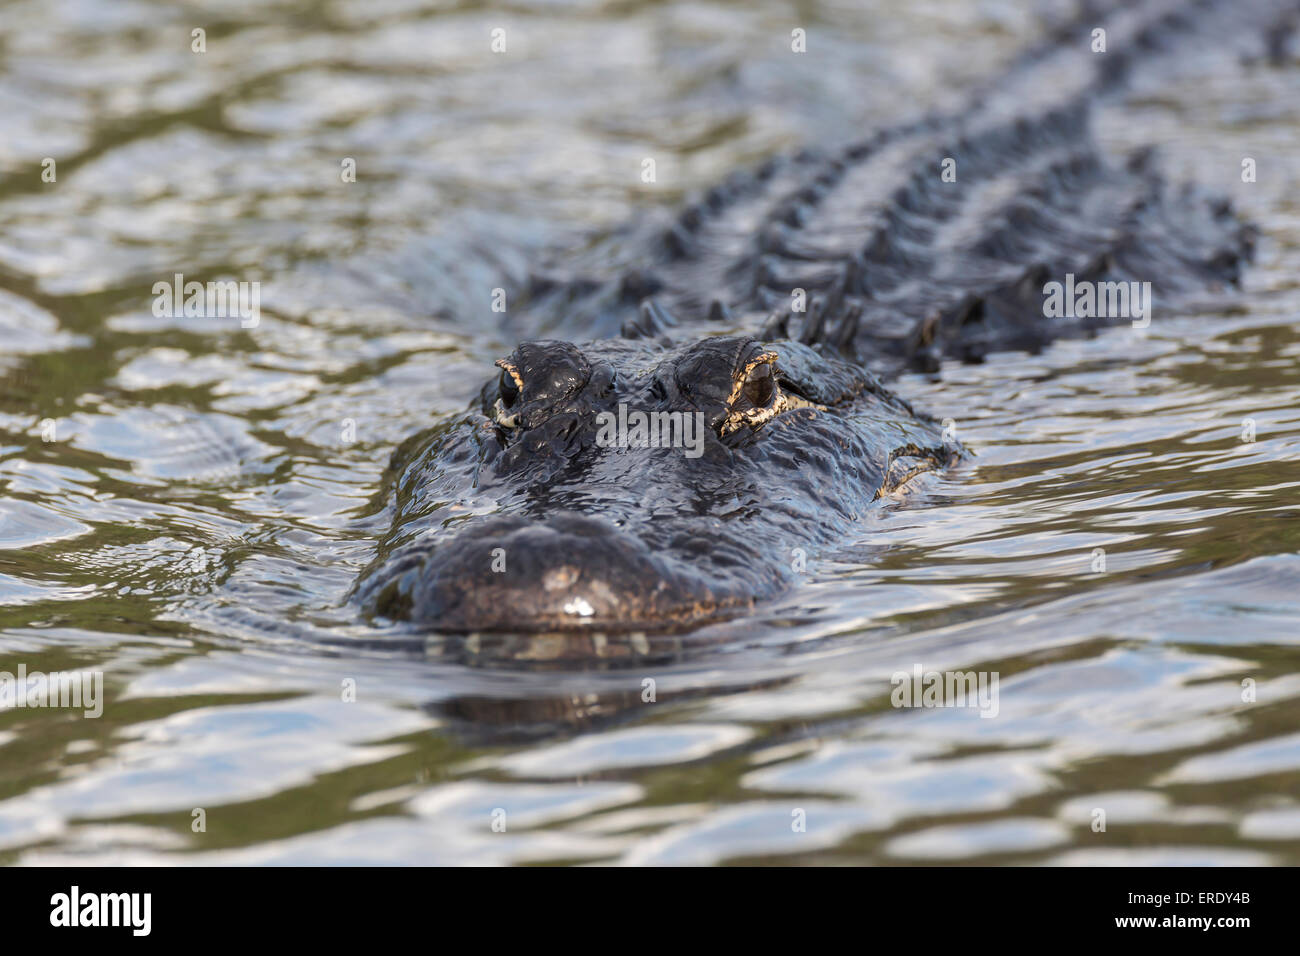 American alligator (Alligator mississippiensis) swimming in water, Everglades National Park, Florida, USA Stock Photo